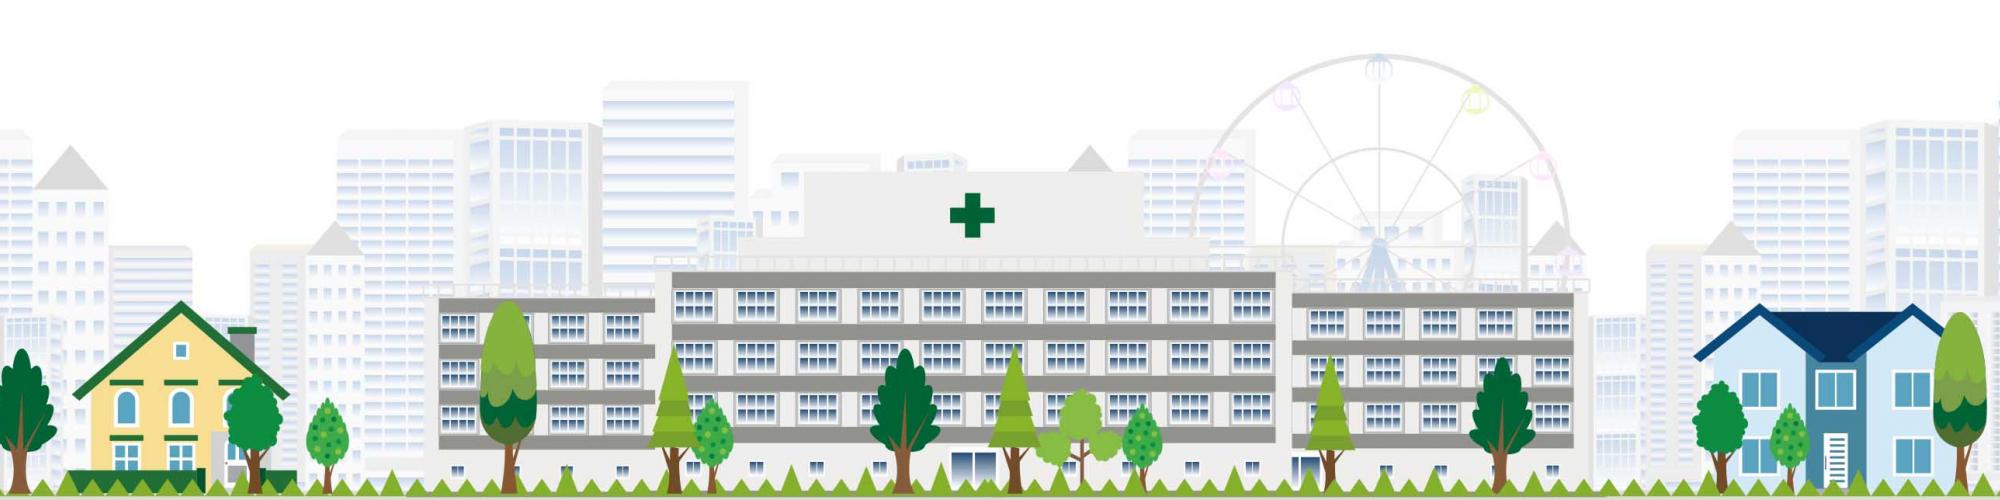 GRN Gesundheitszentren Rhein-Neckar gGmbH - Klinik Eberbach